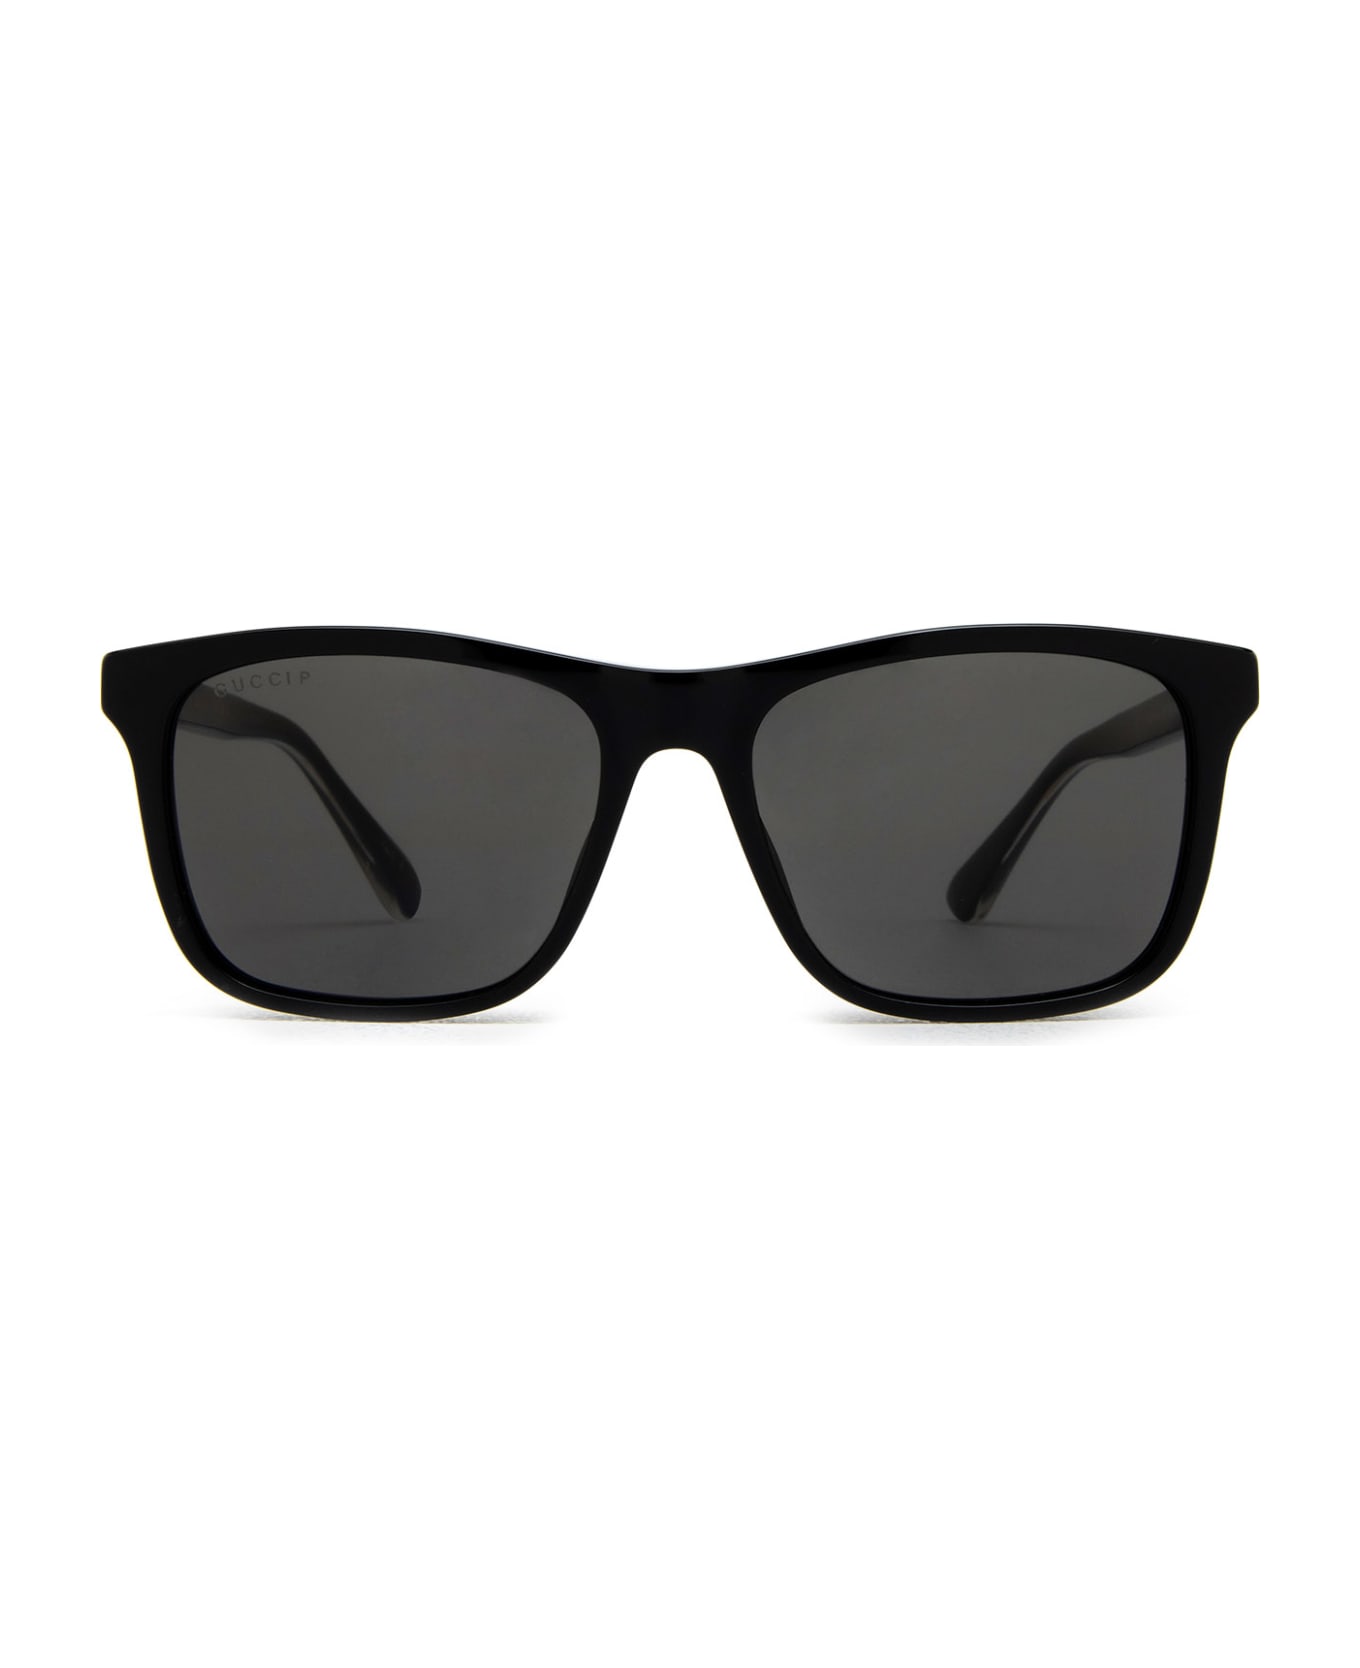 Gucci Eyewear Gg0381sn Black Sunglasses - Black